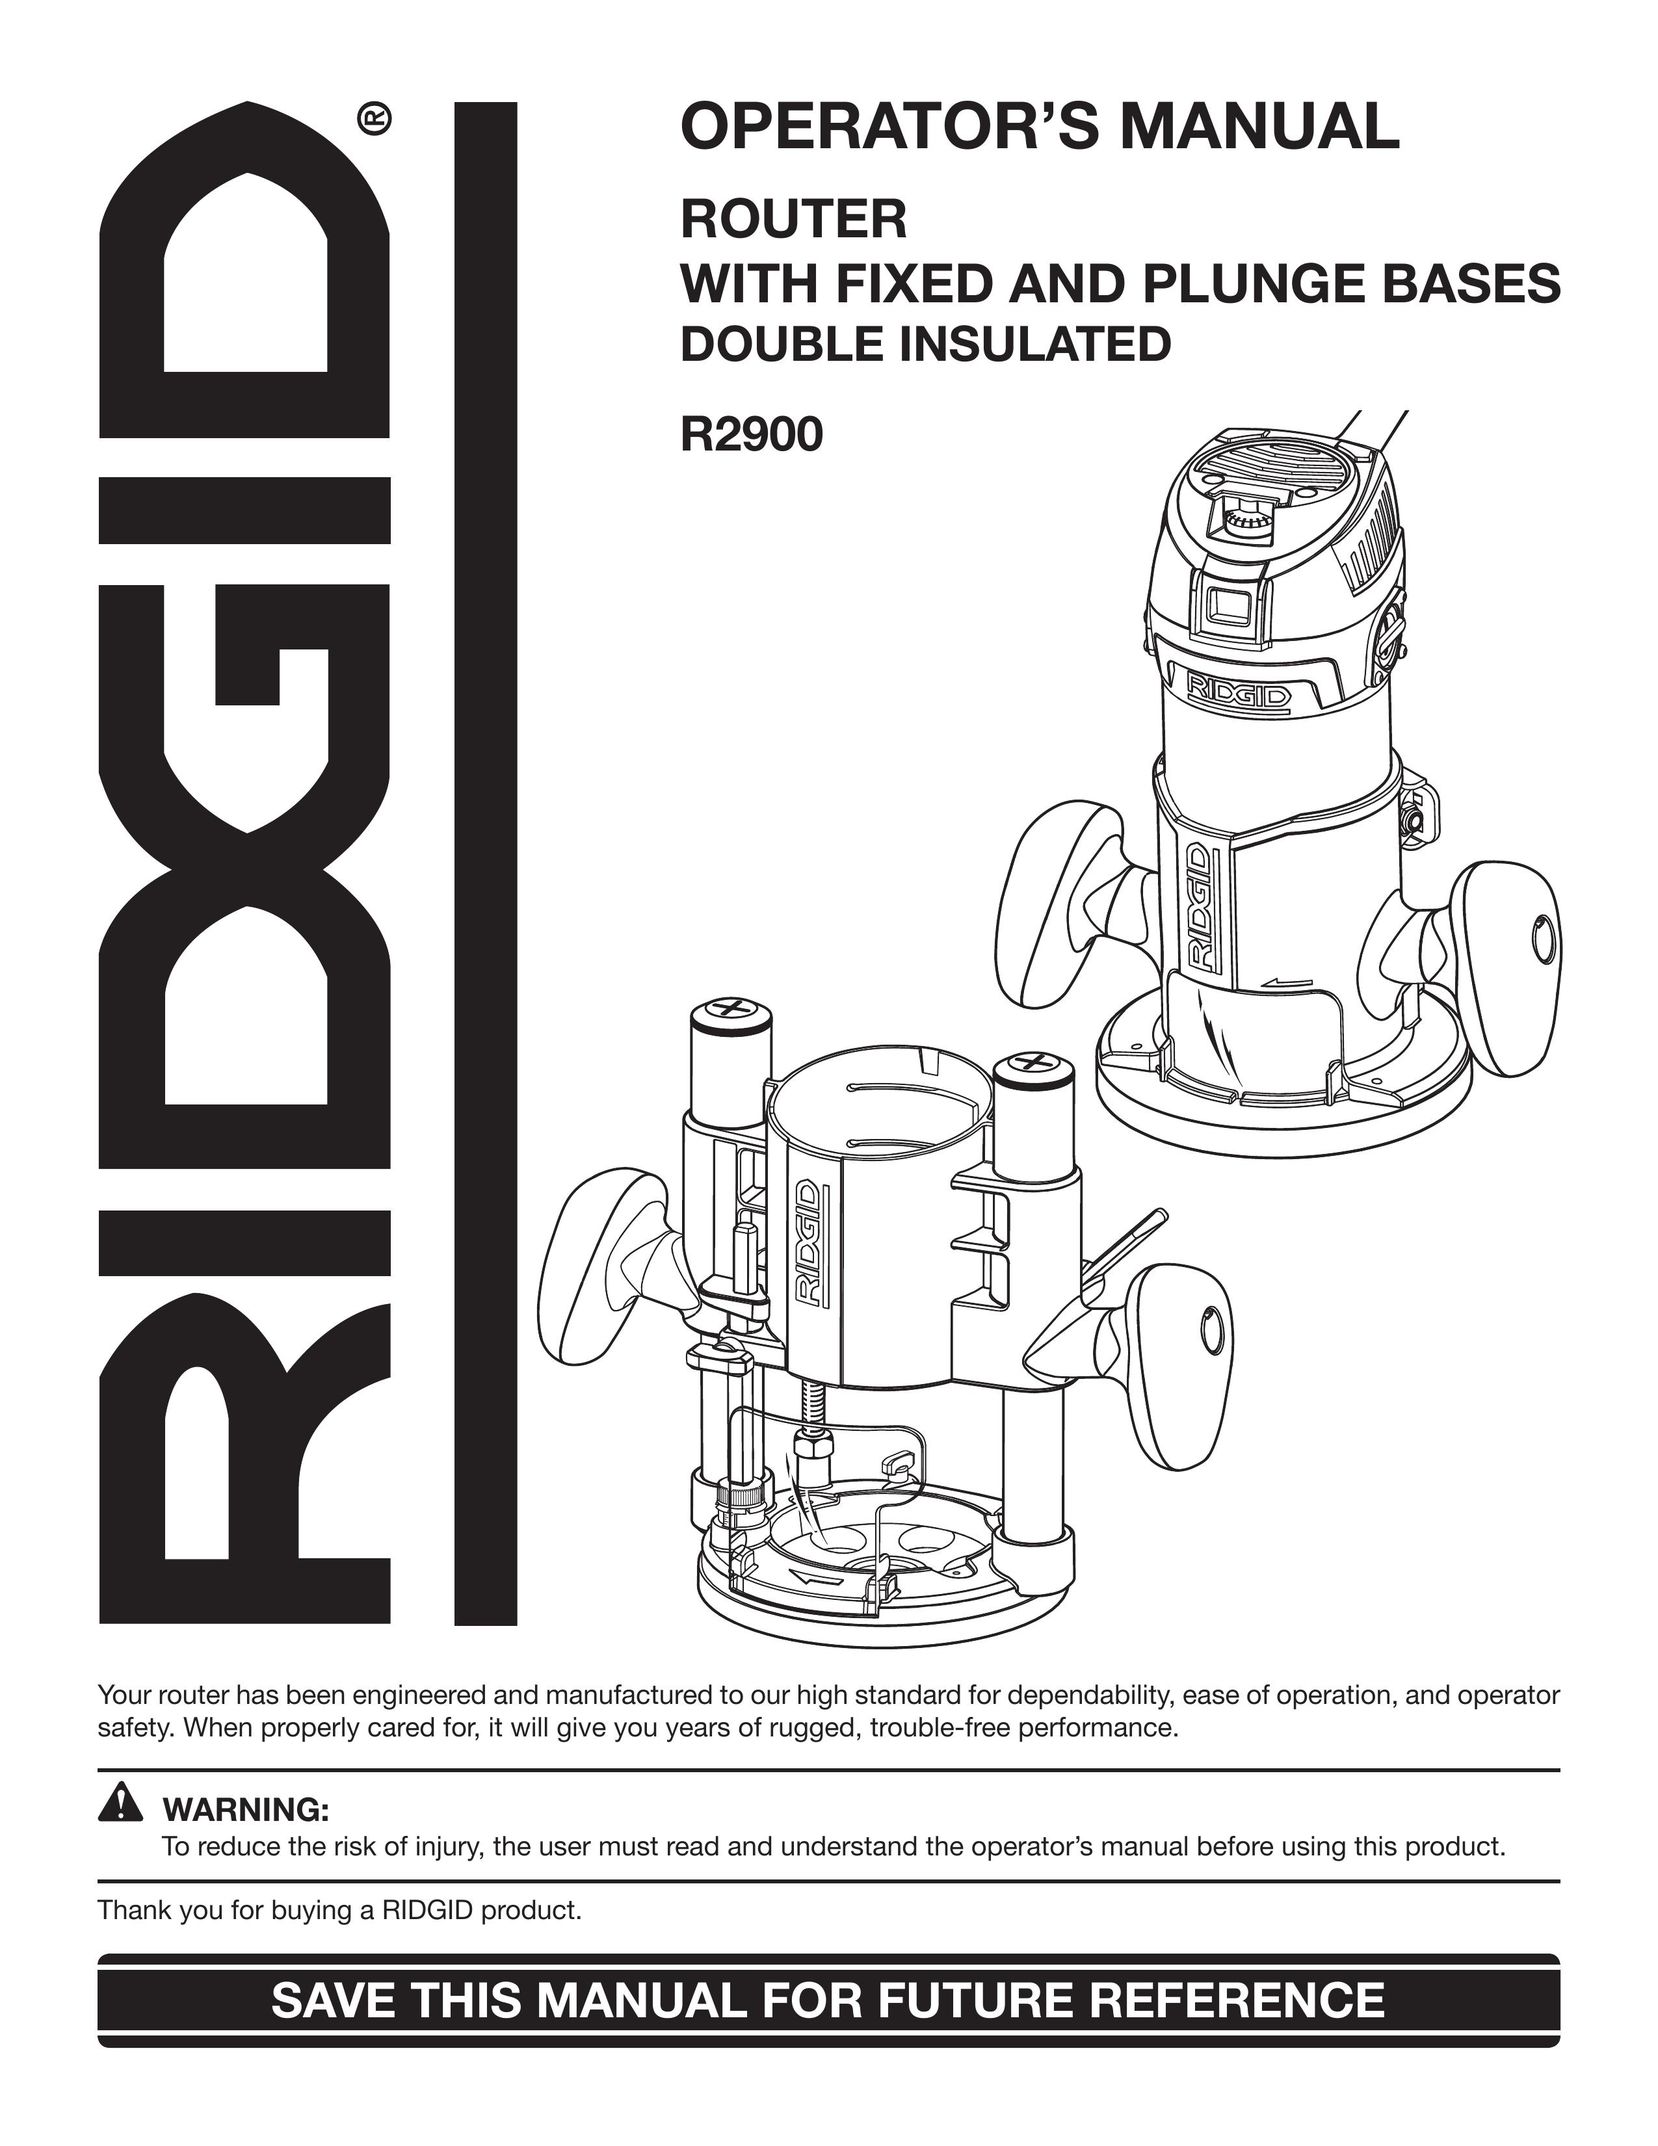 RIDGID R2900 Router User Manual